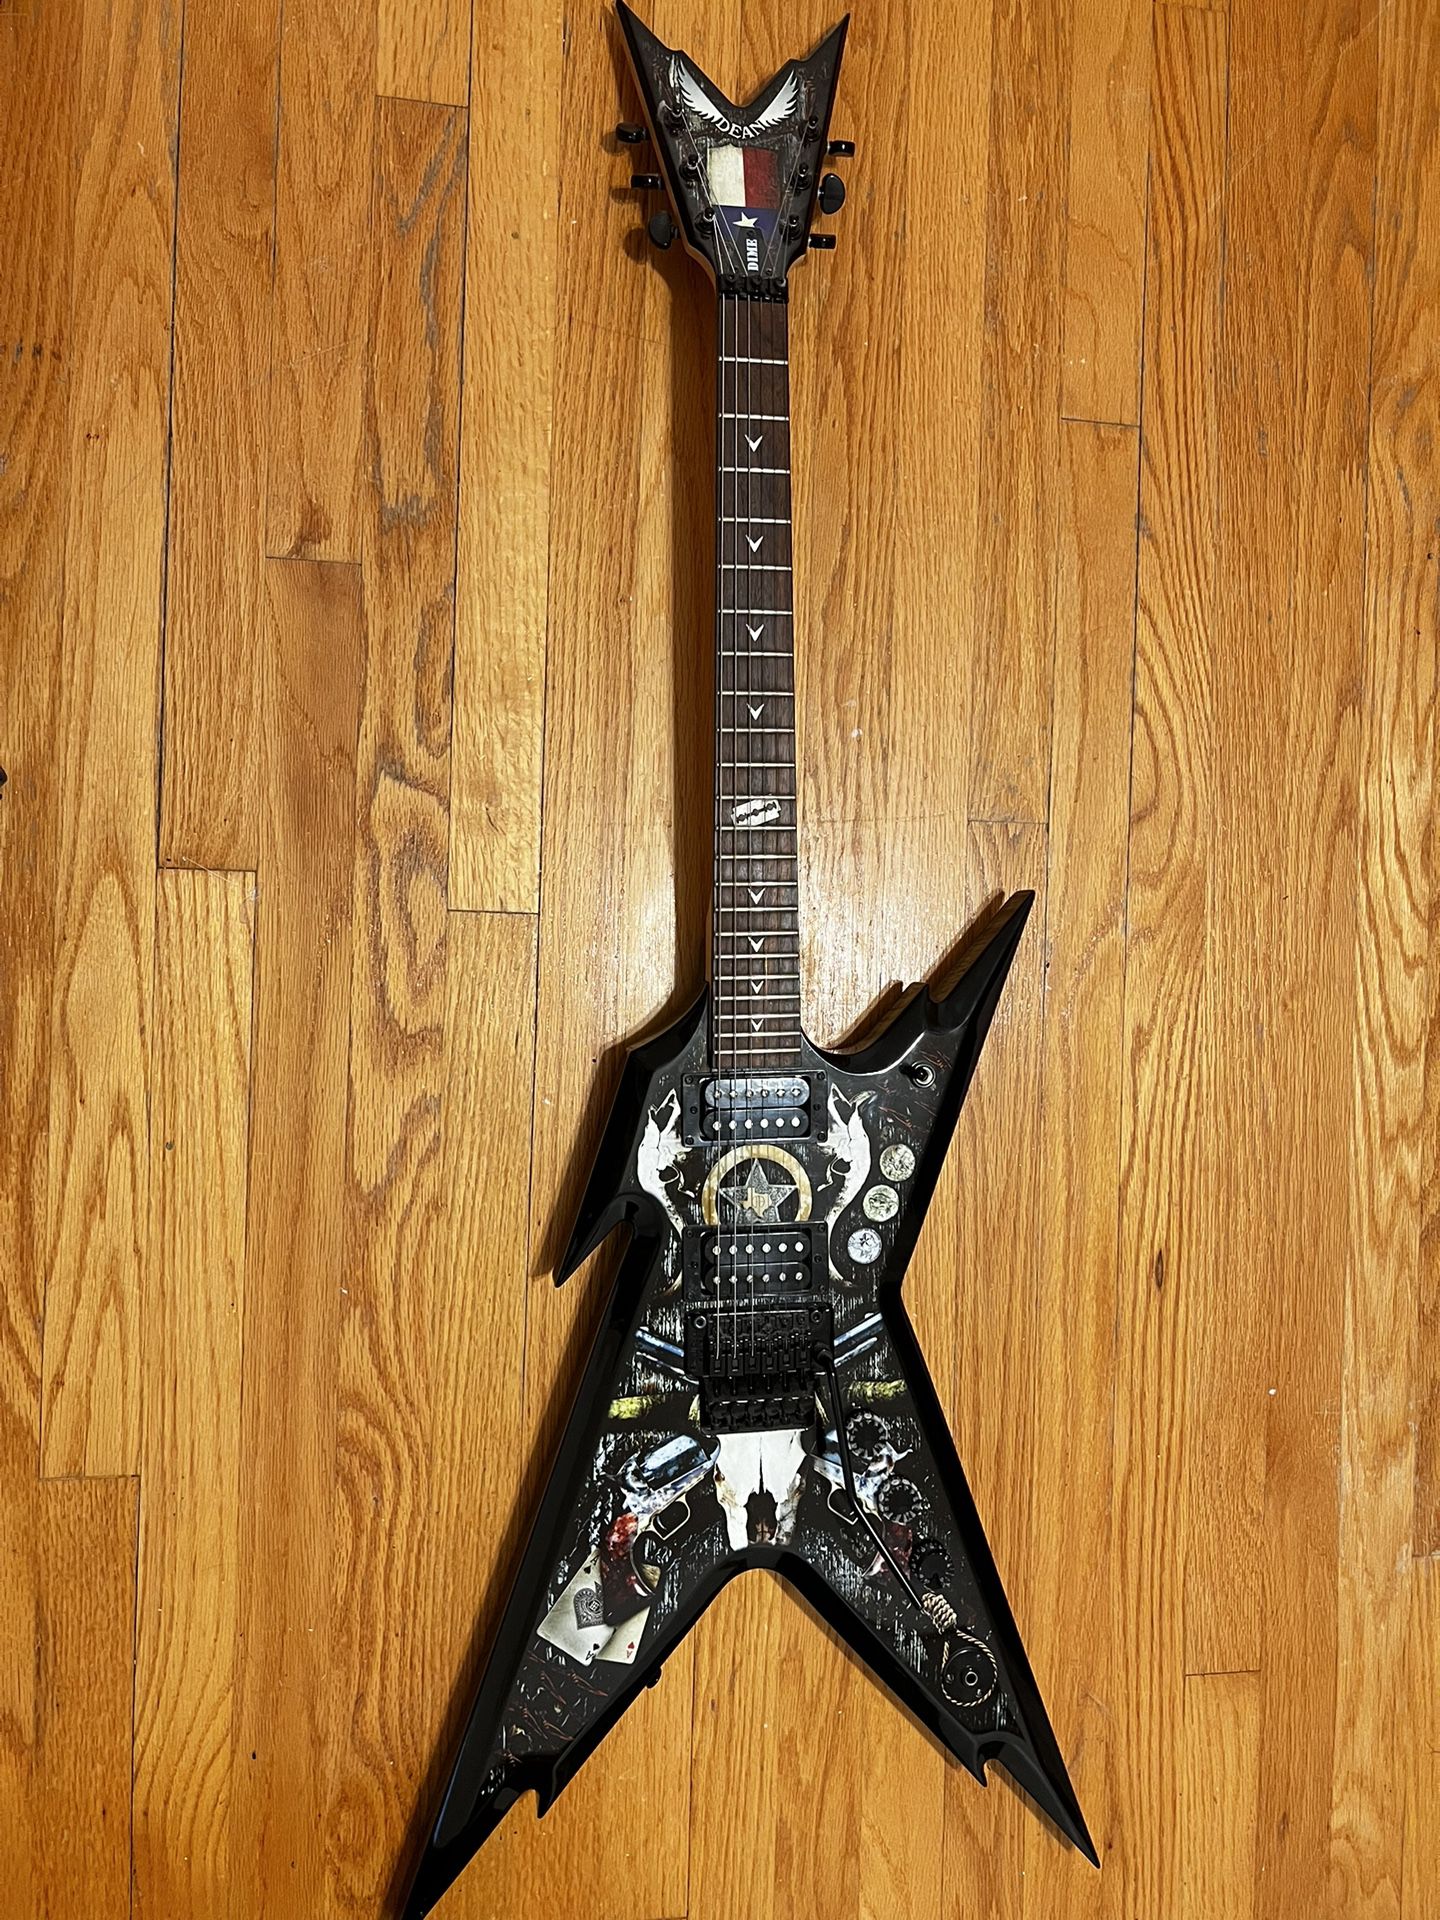 Dean Razorback Dimebag Floyd Electric Guitar with Lone Star Graphic